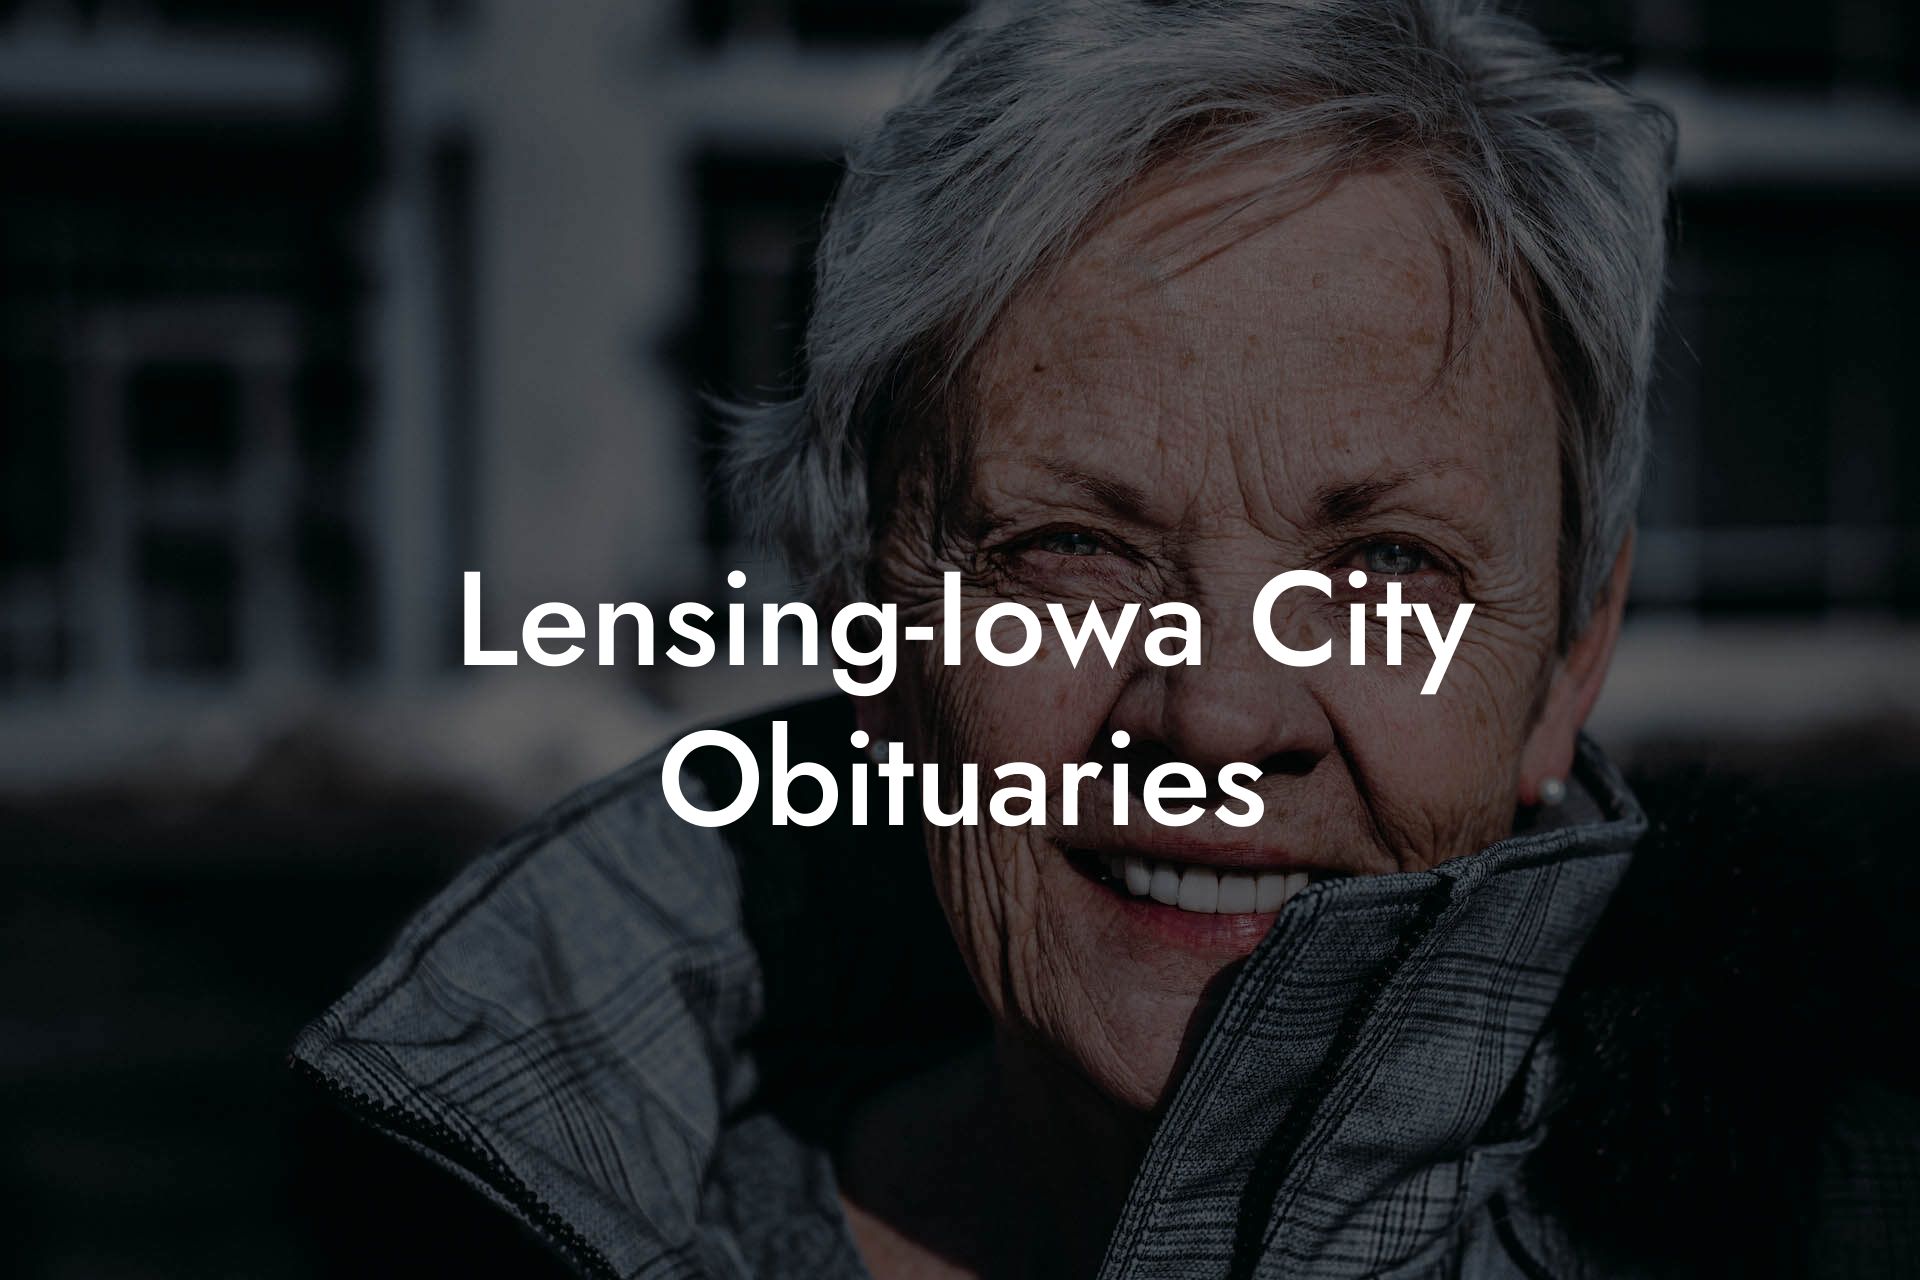 Lensing-Iowa City Obituaries